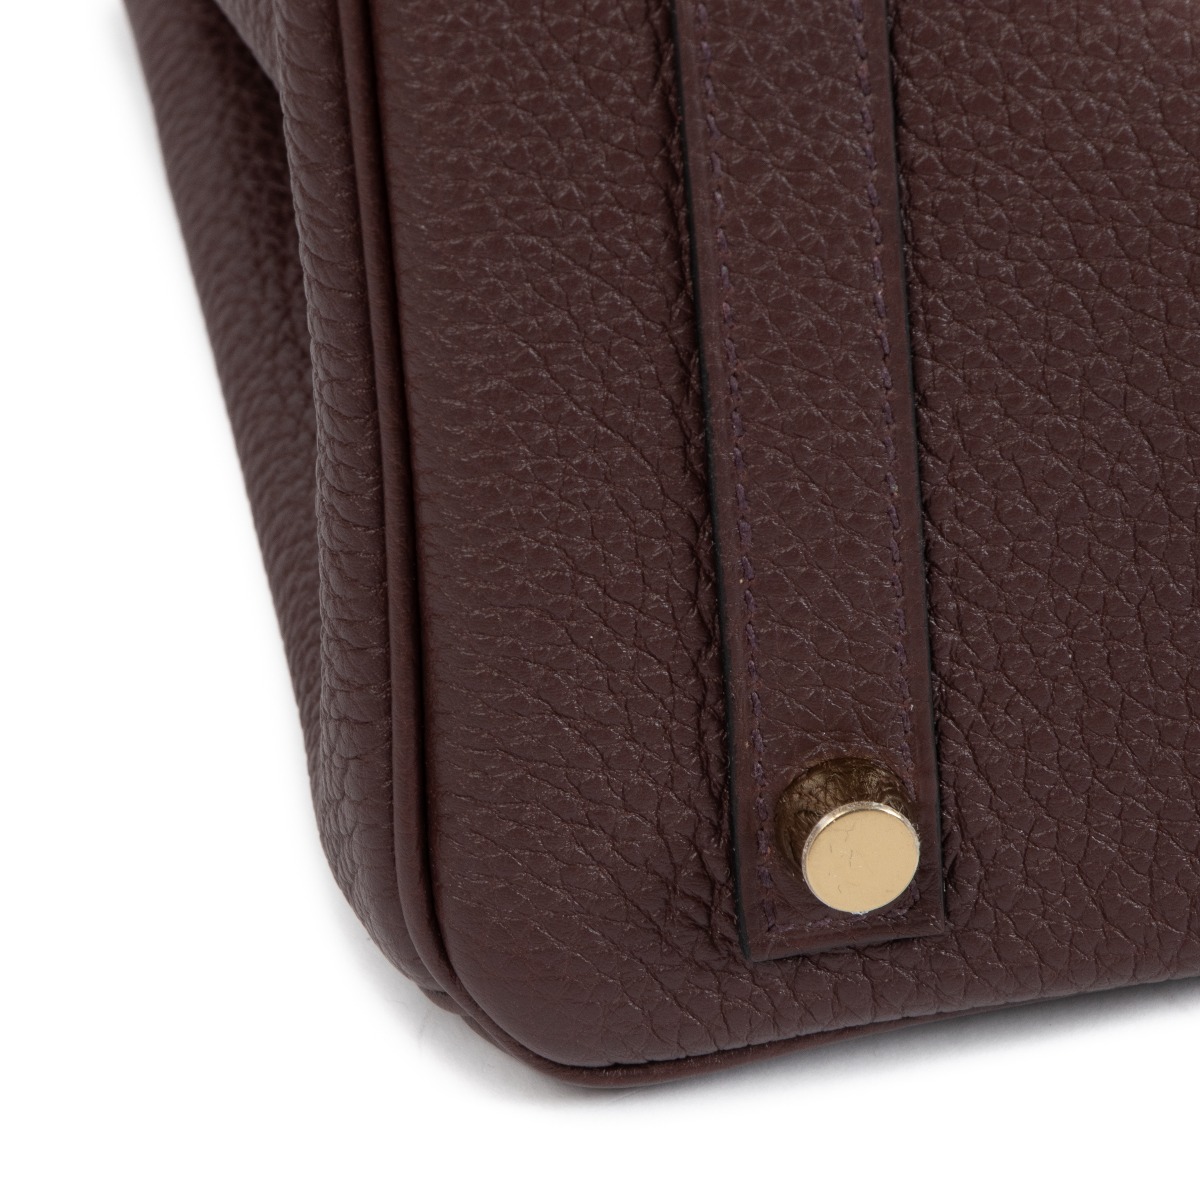 Hermès Rouge Sellier Togo Leather Birkin 25cm at 1stDibs